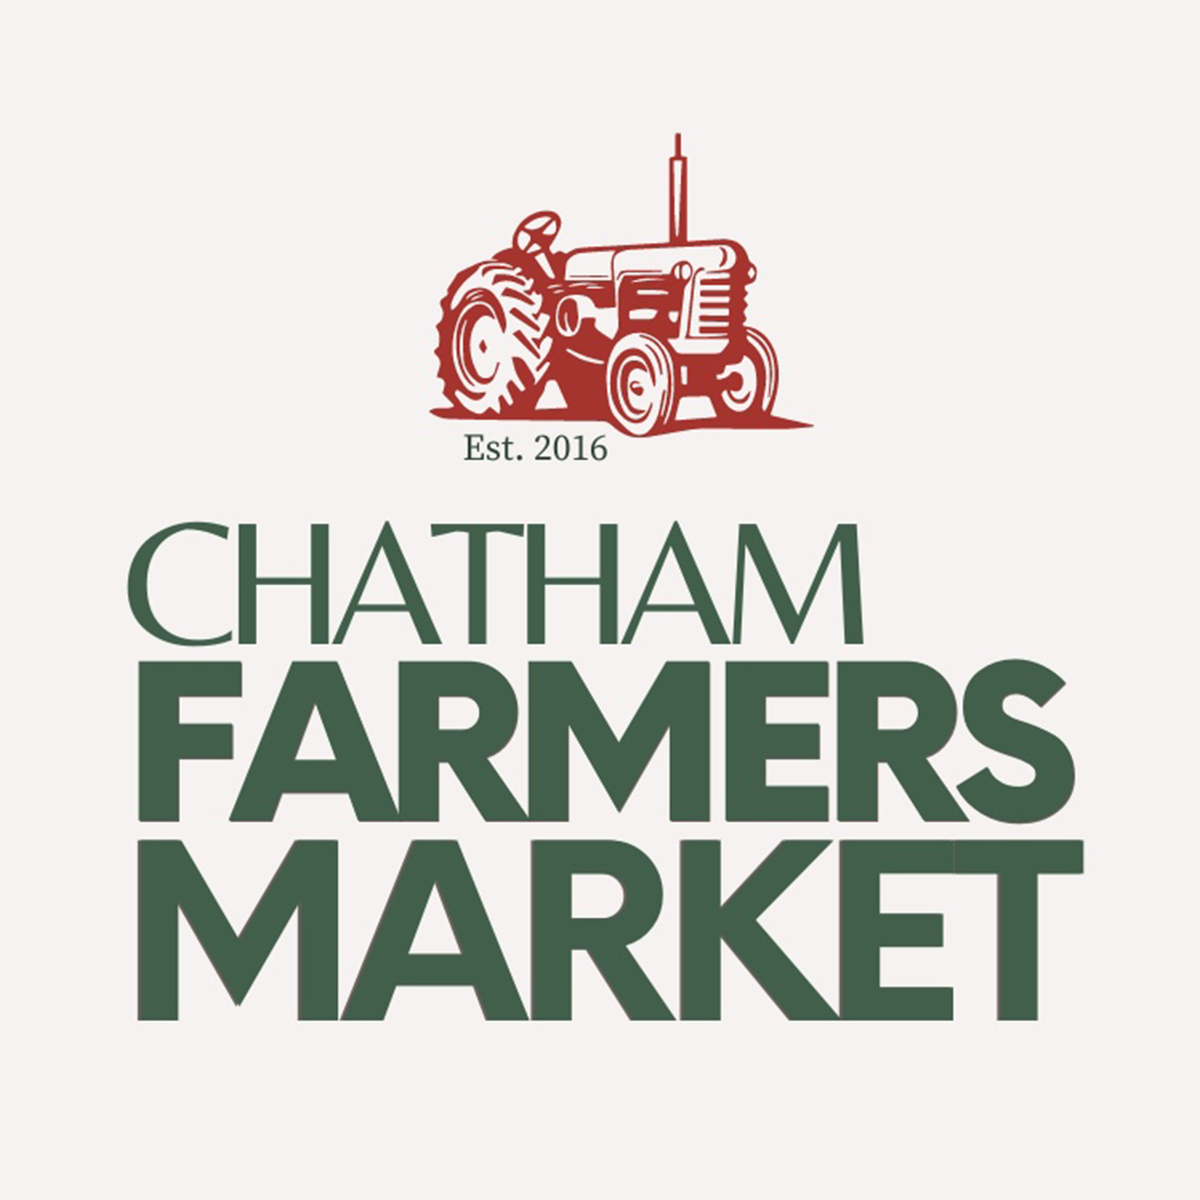 Chatham Farmers Market logo